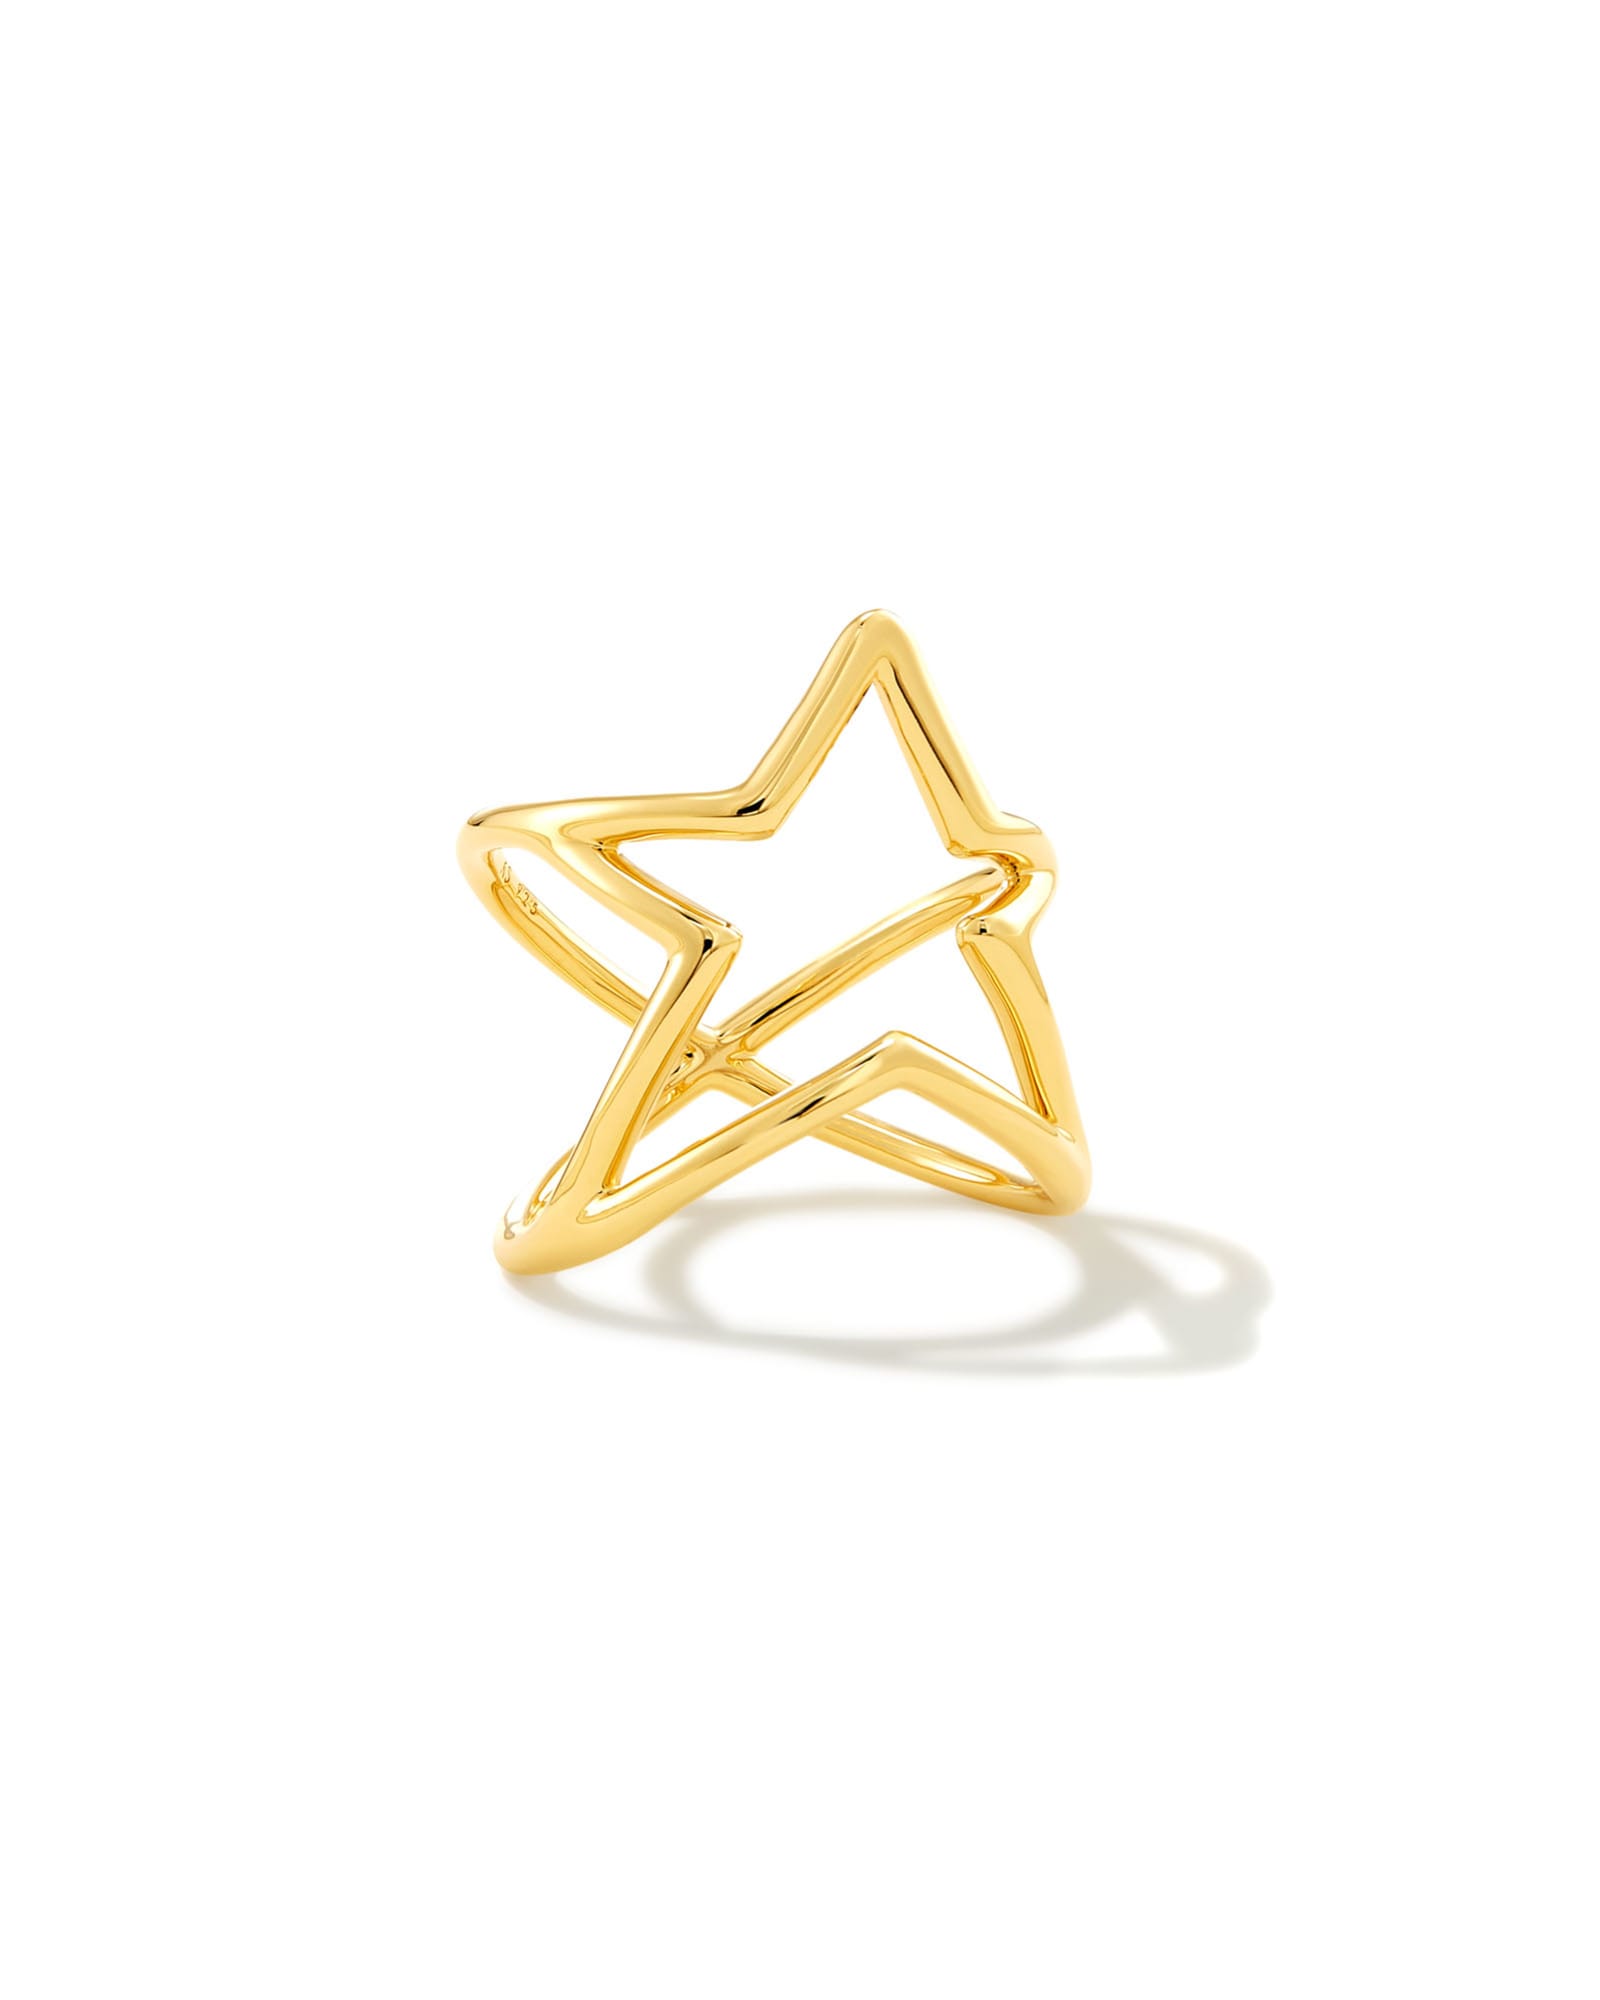 Kendra Scott Open Star Statement Ring in 18k Gold Vermeil | Sterling Silver